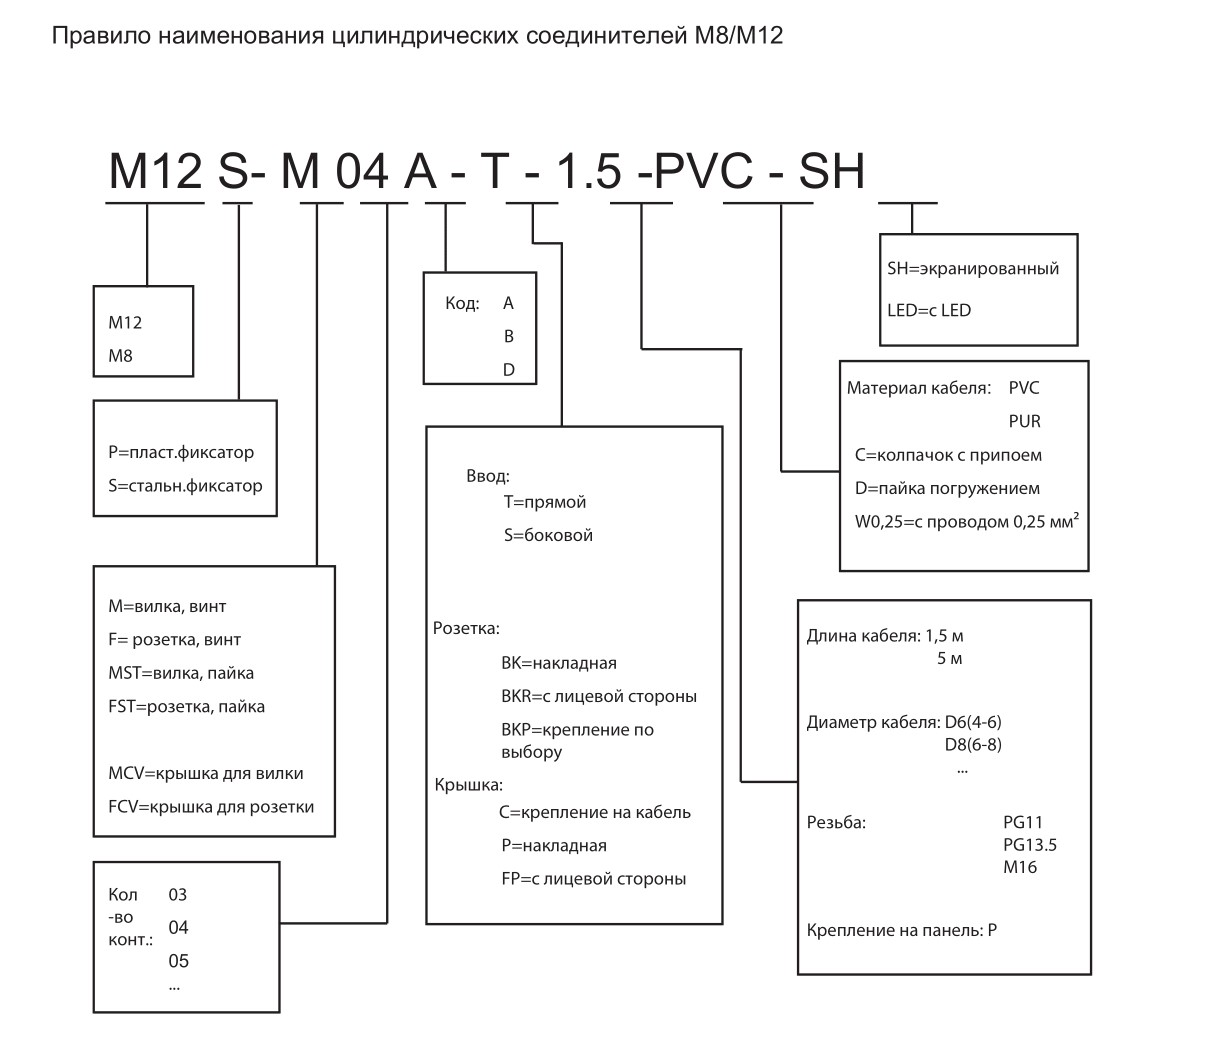 Цилиндрический соединитель-вилка с кабелем M12-M04D-BKR-M16-8.0-PUR-PFN 1630043014025: Структура обозначения